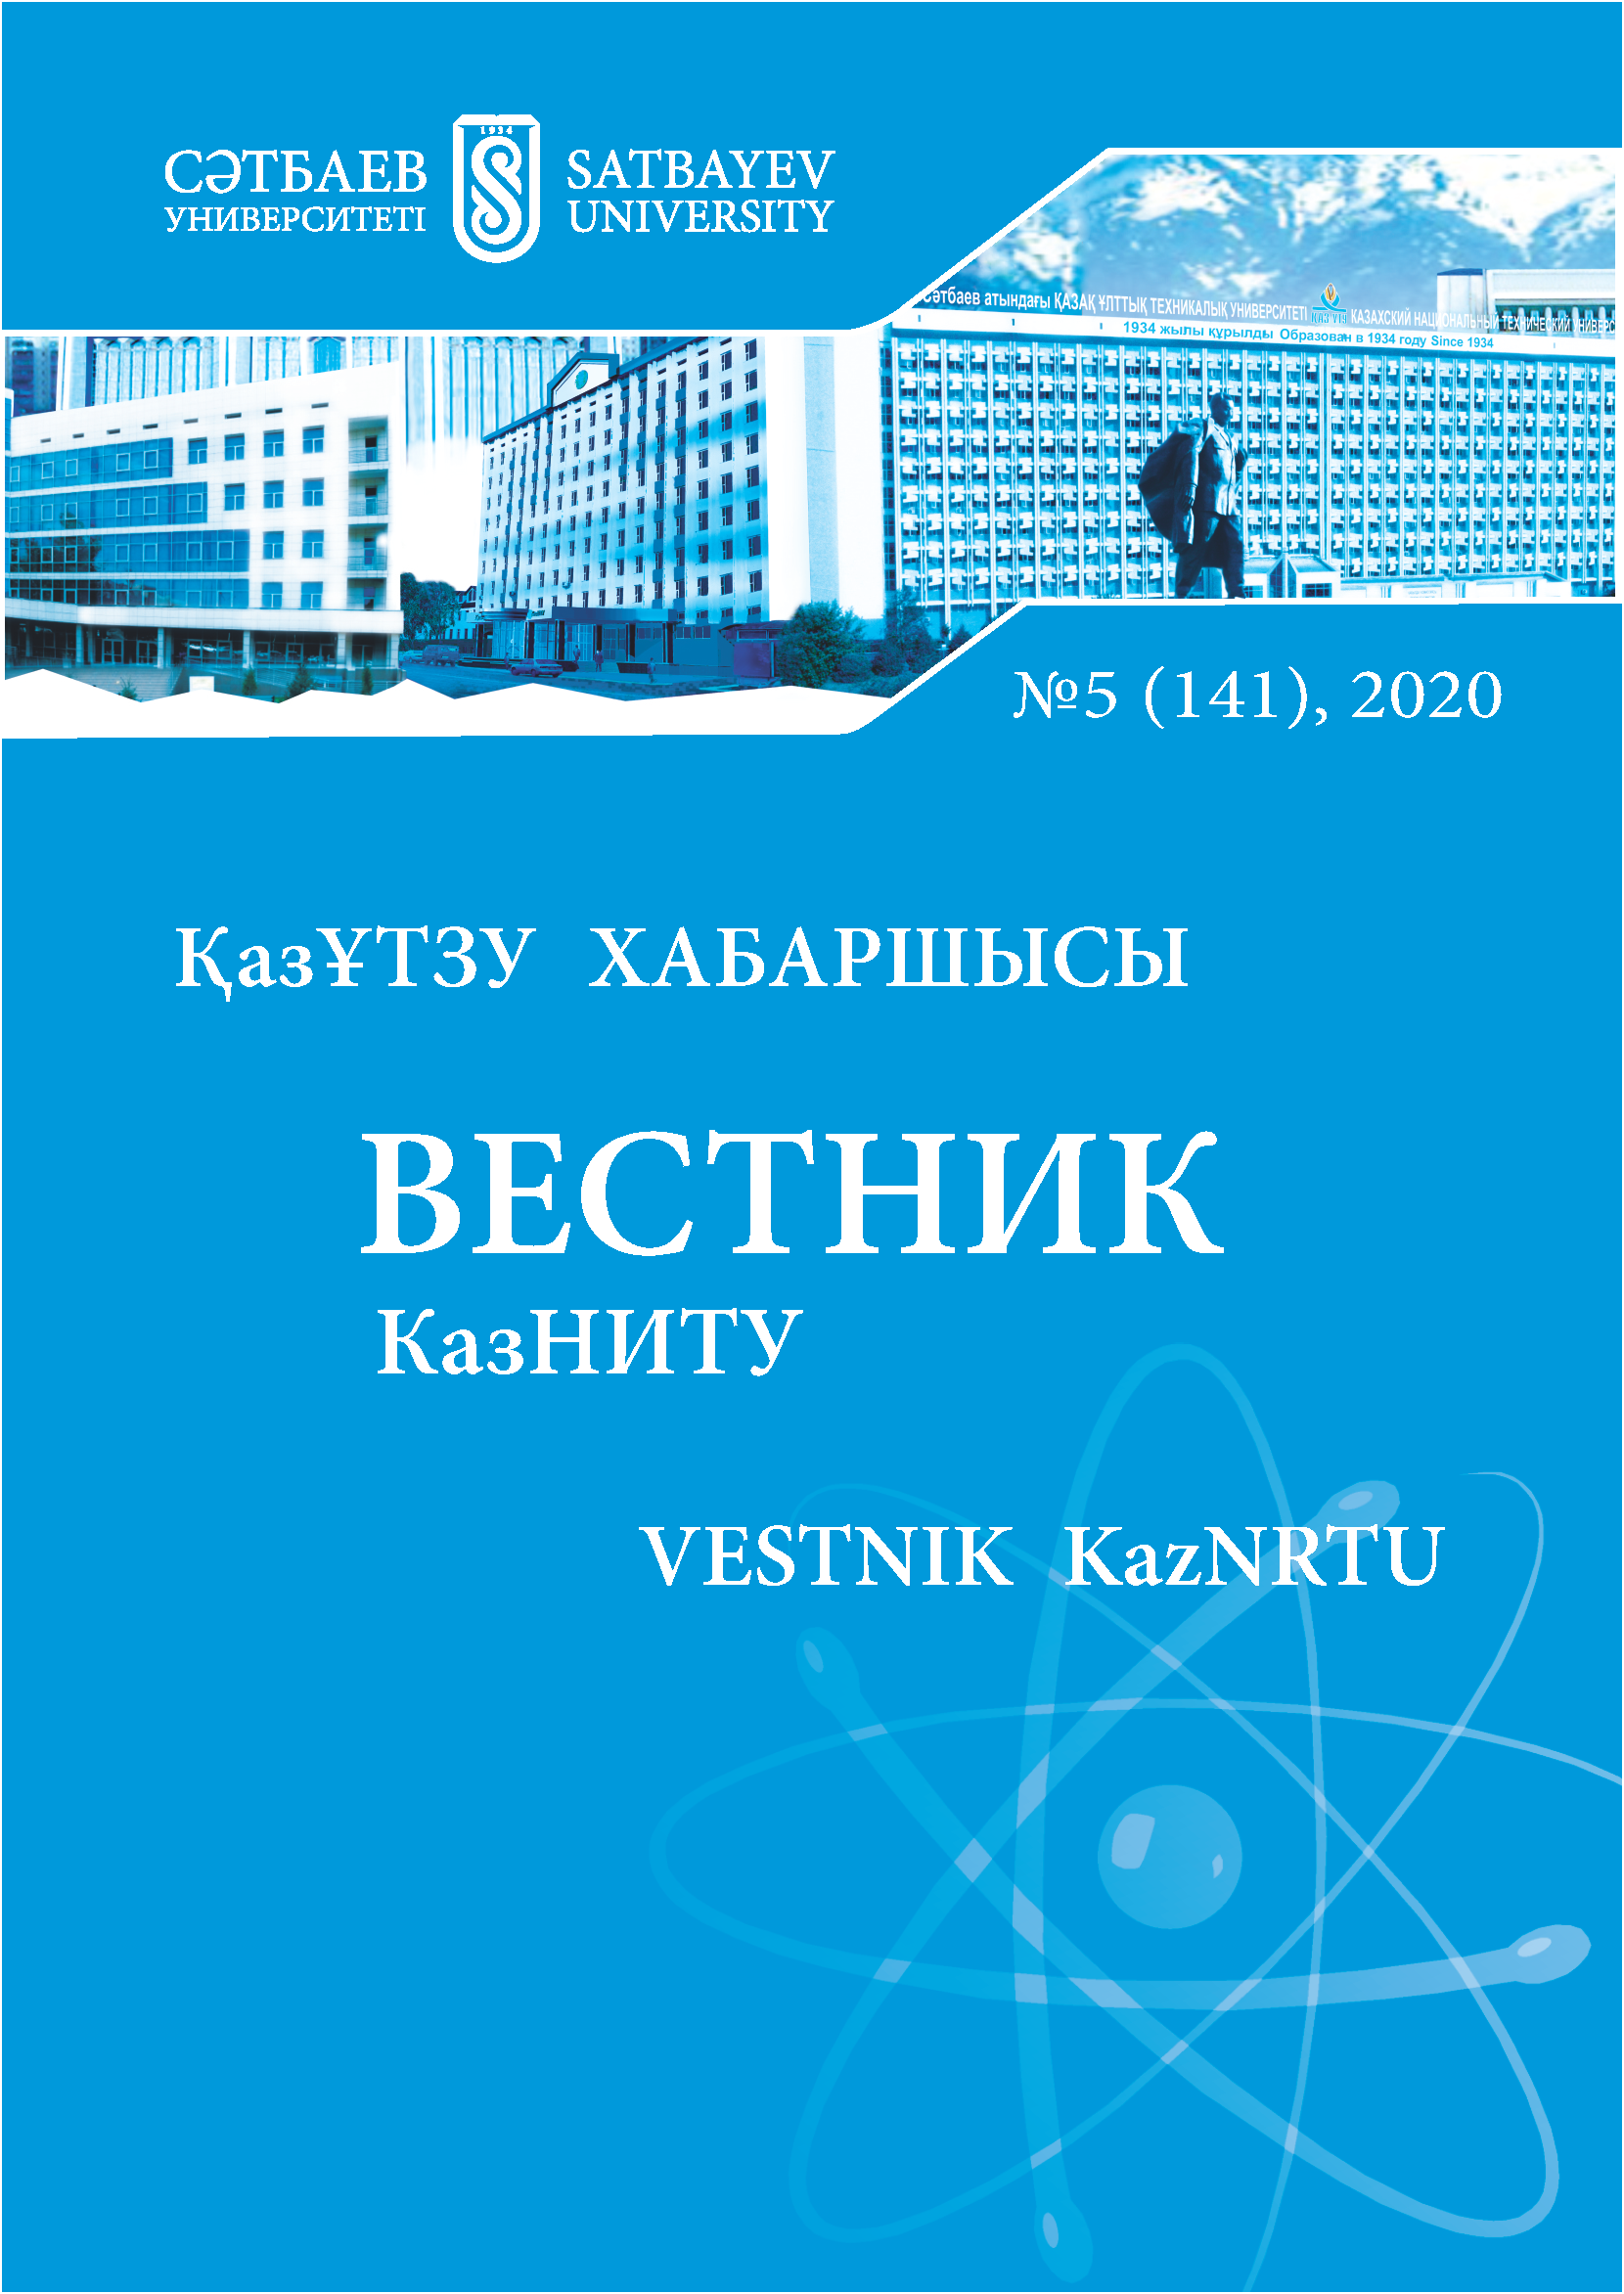 					View Vol. 141 No. 5 (2020): Vestnik KazNRTU
				